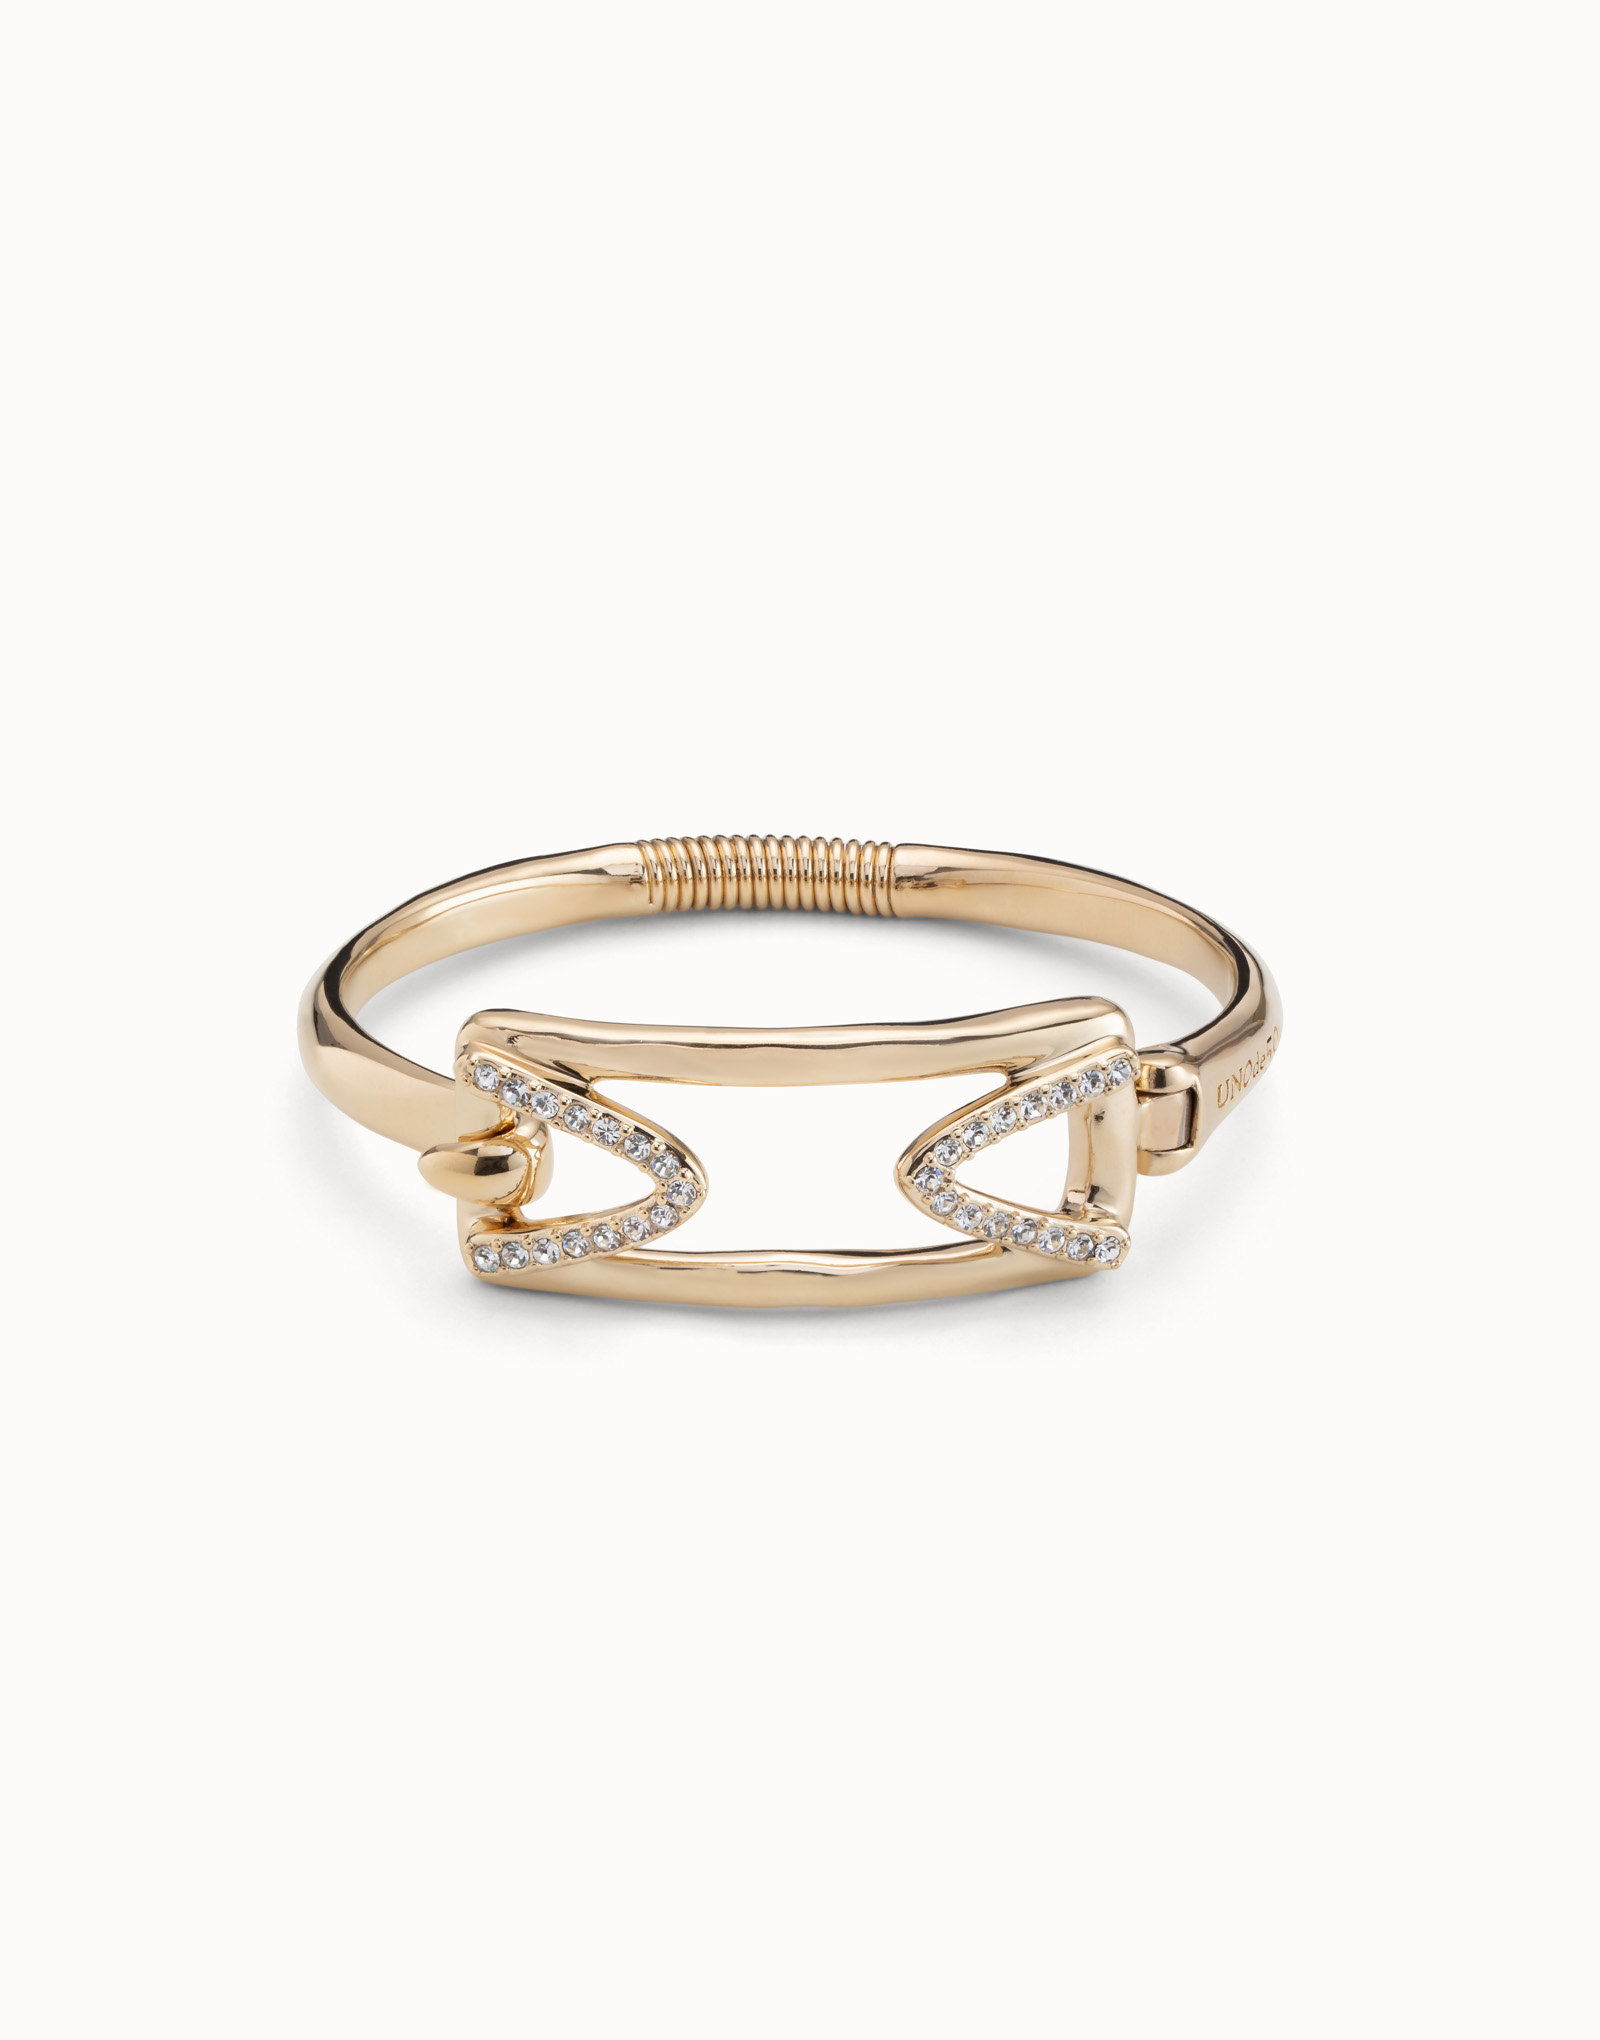 18K gold-plated bracelet with rectangular central link and topaz, Golden, large image number null